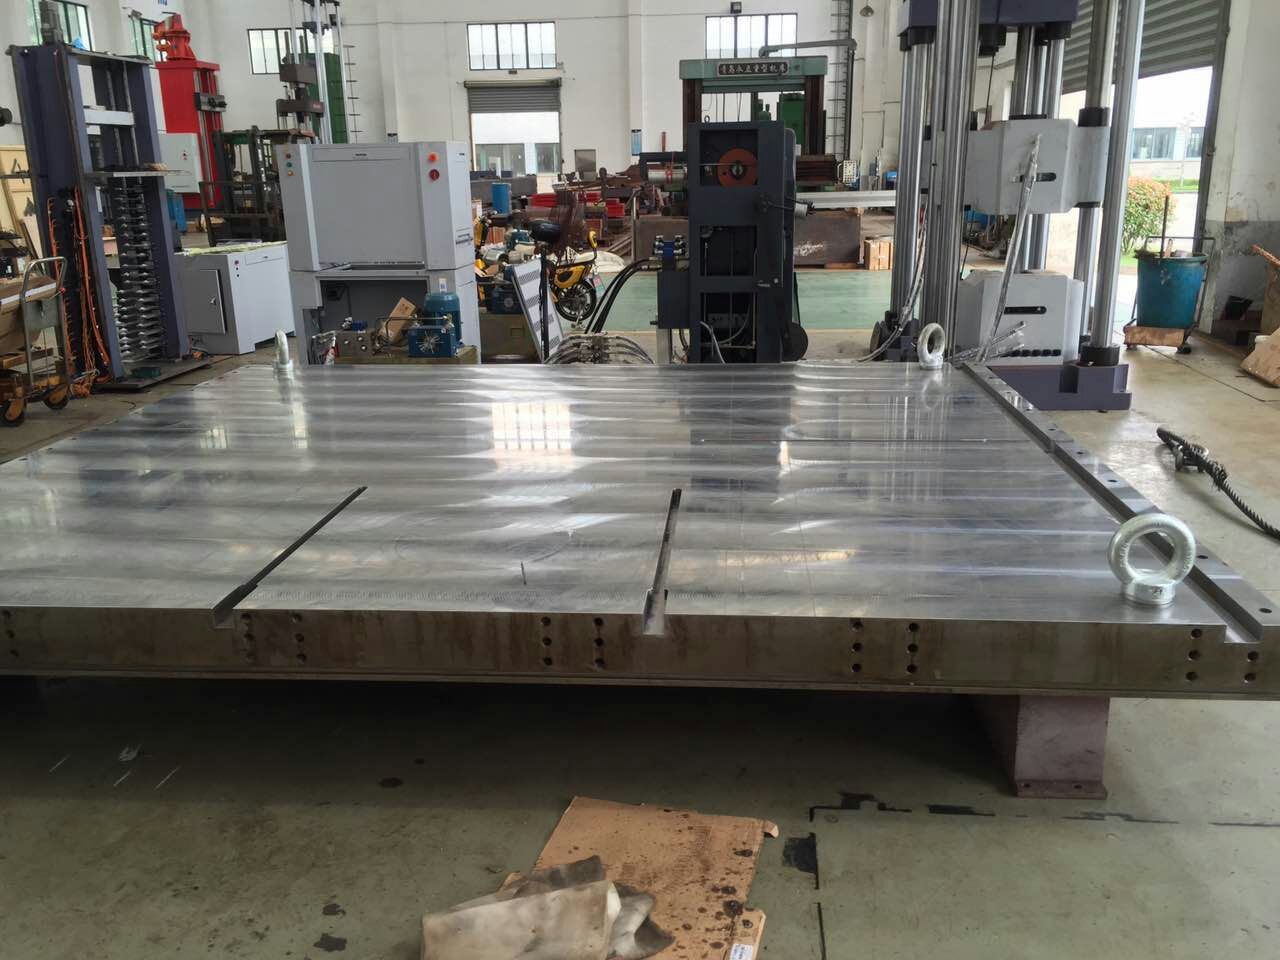 HUALONG 10,000Tons (100,000kN 100MN) Elastomeric Bearing Testing Machine under production